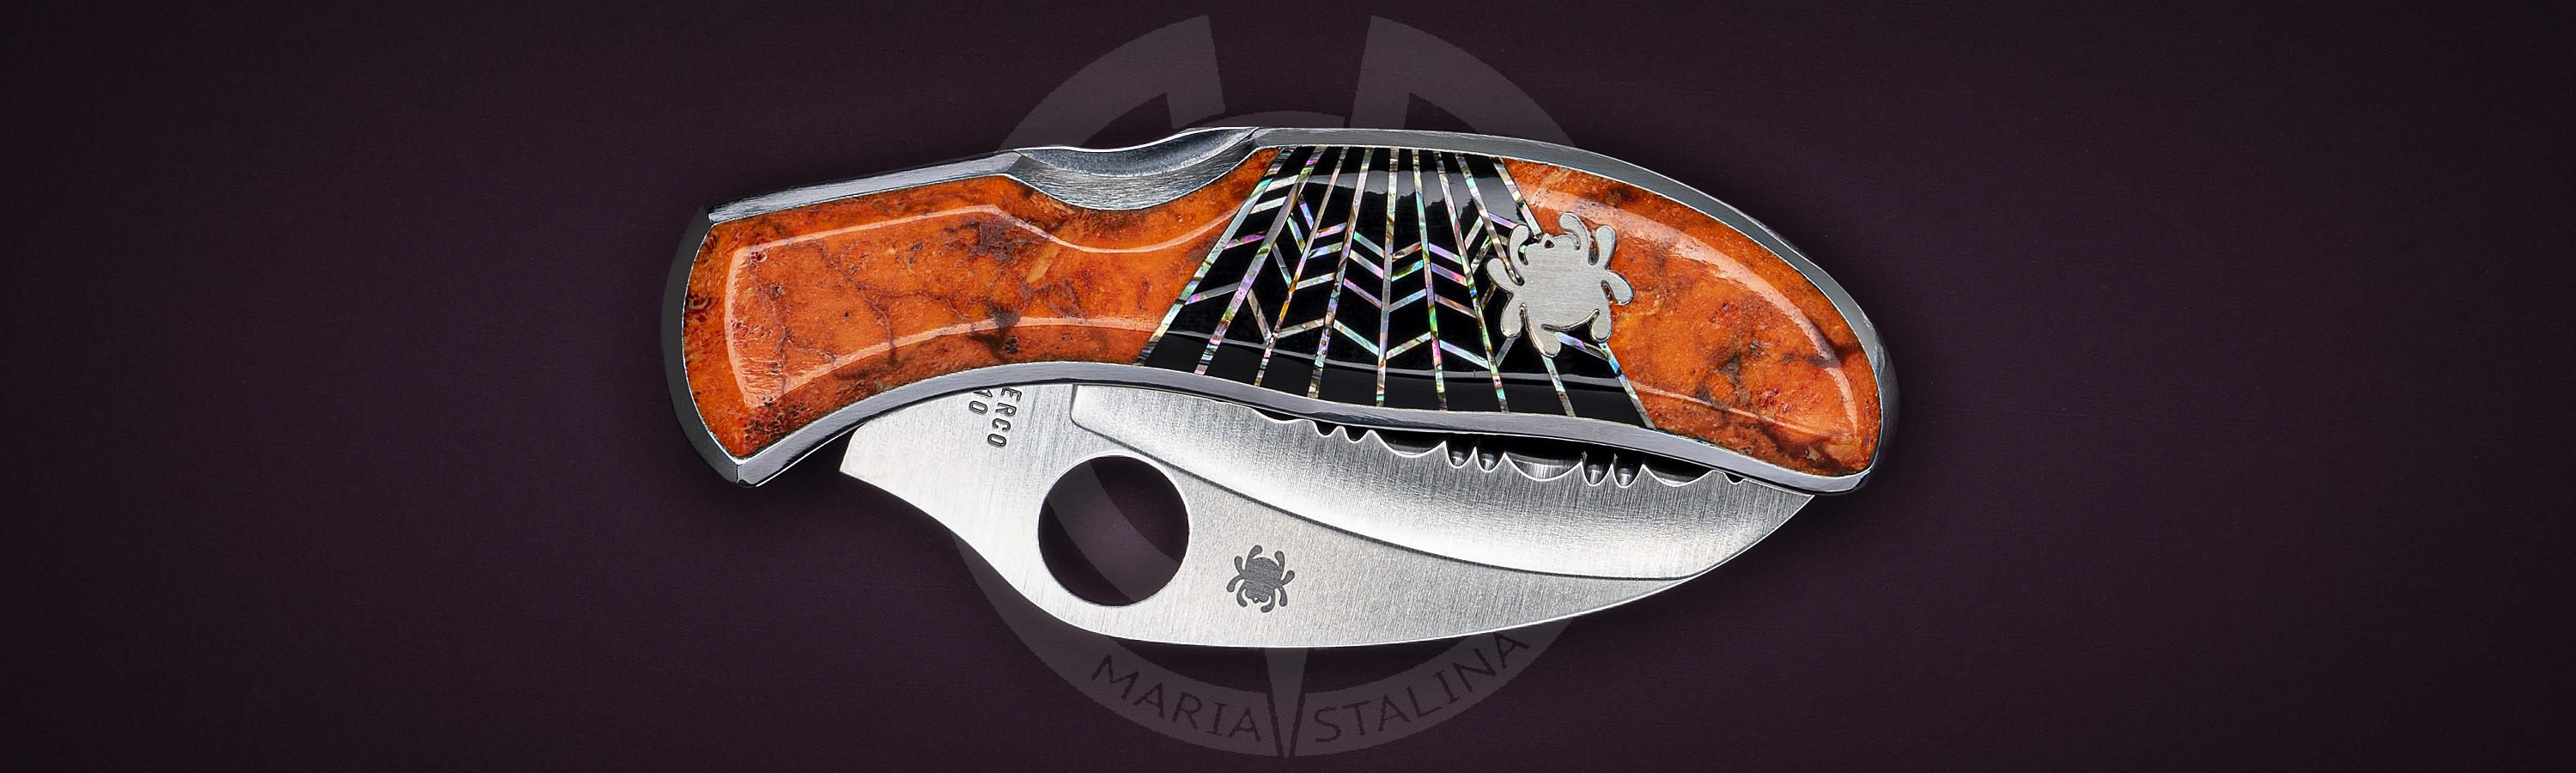 Рукоять ножа Harpy кастомизирована компанией Santa Fe Stoneworks.